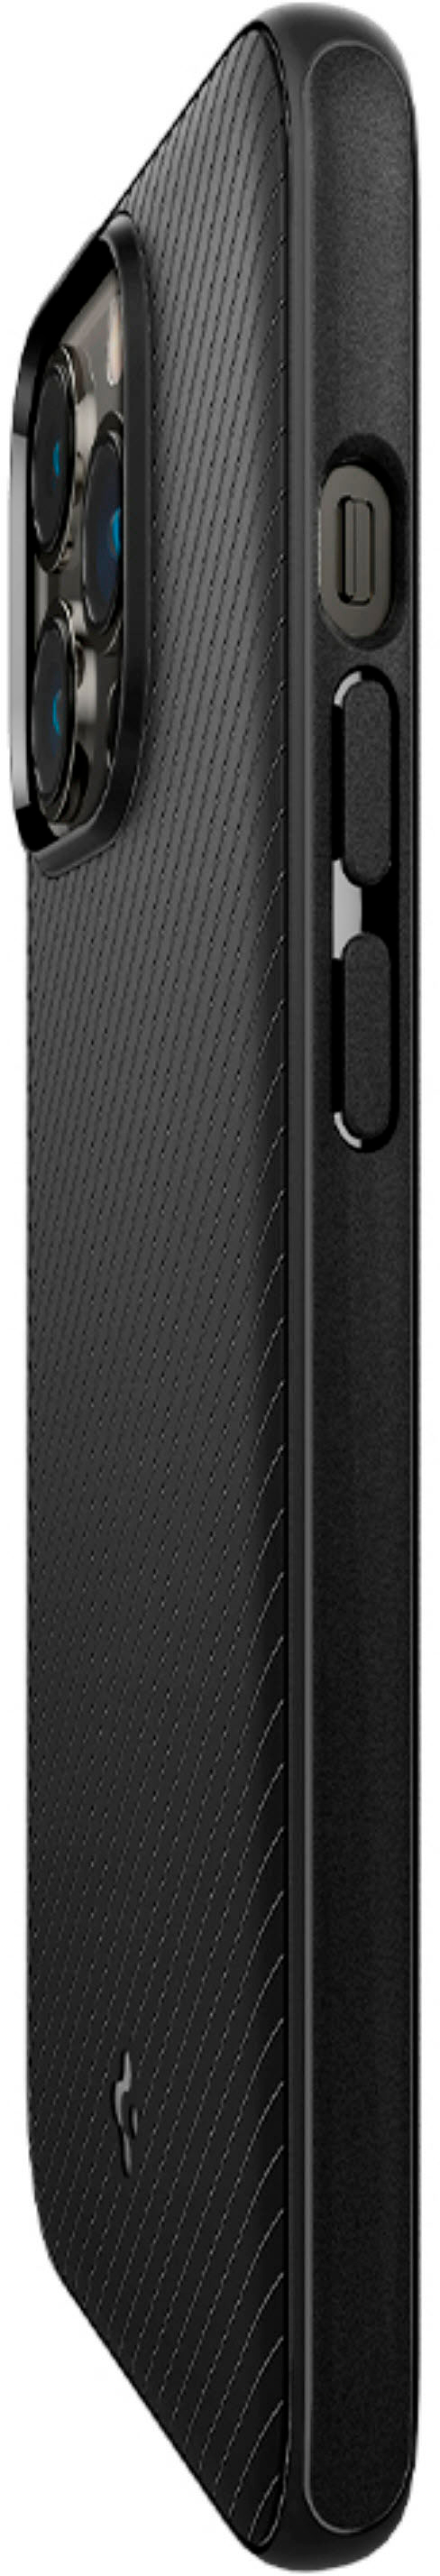 Best Buy: Spigen Core Armor Hard Shell Case for Apple iPhone 13 Pro Max  Black 55775BBR